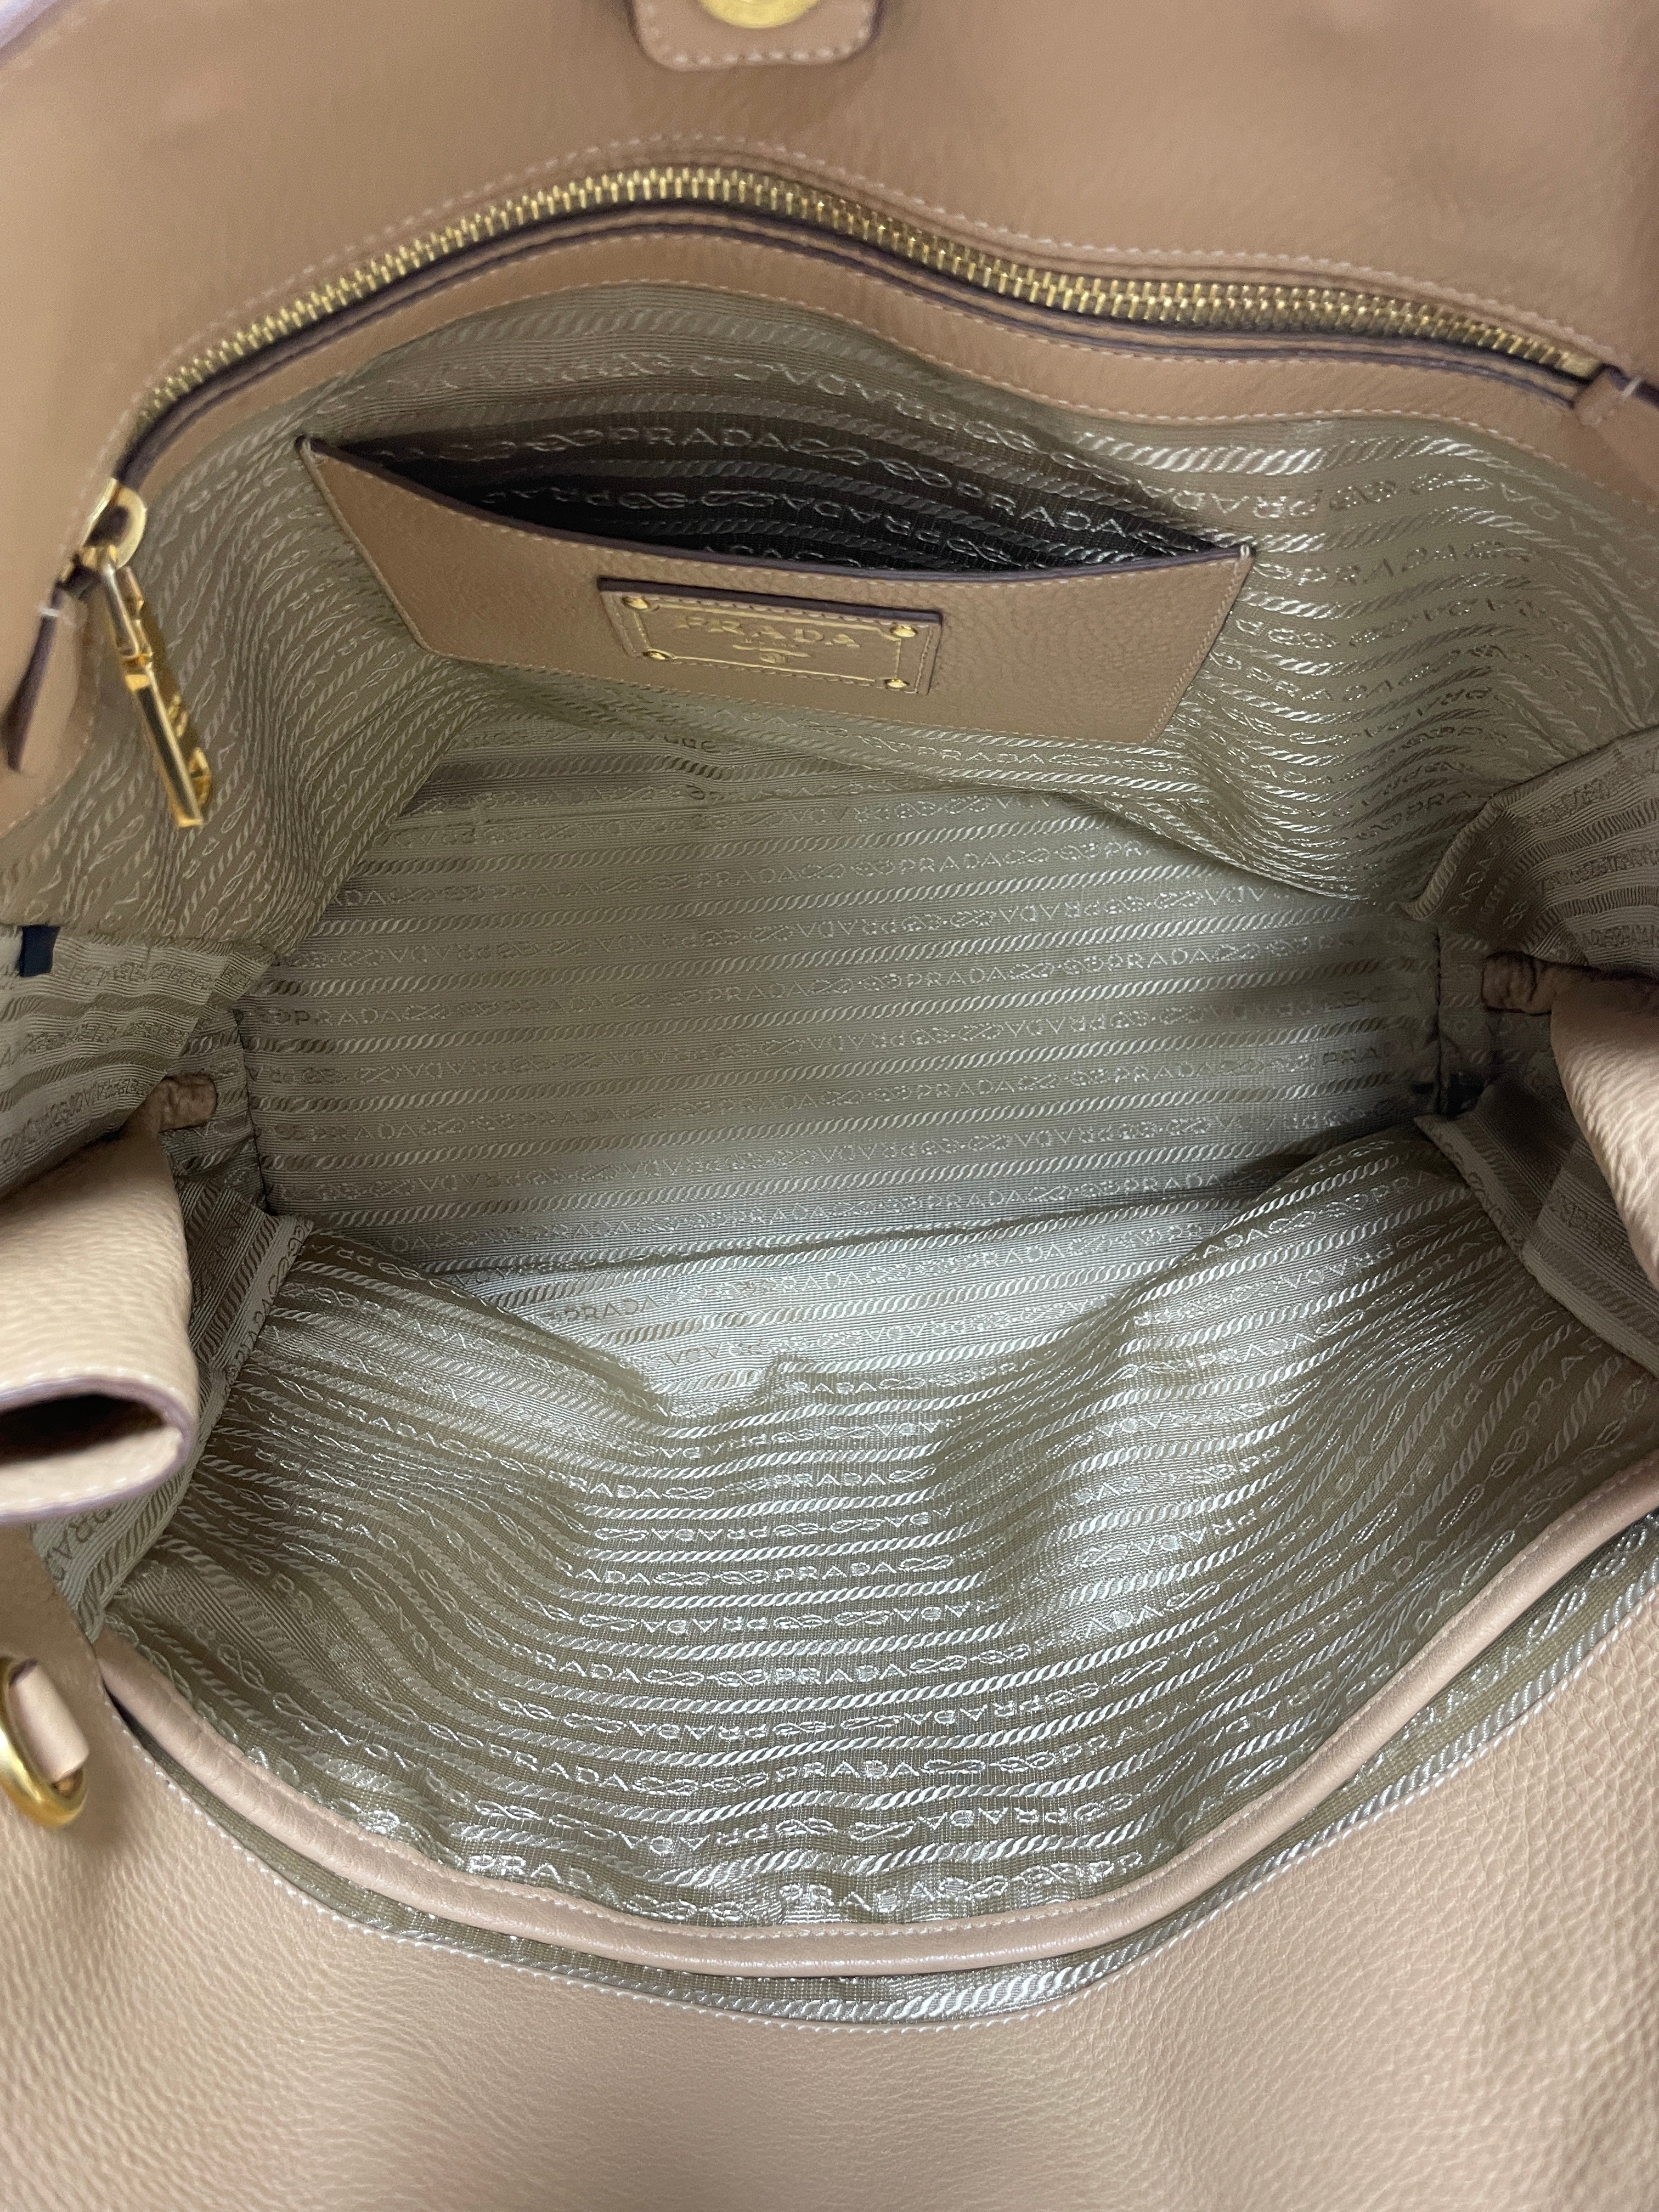 Prada Daino Leather Tote Bag Beige (no strap) Used (7415)